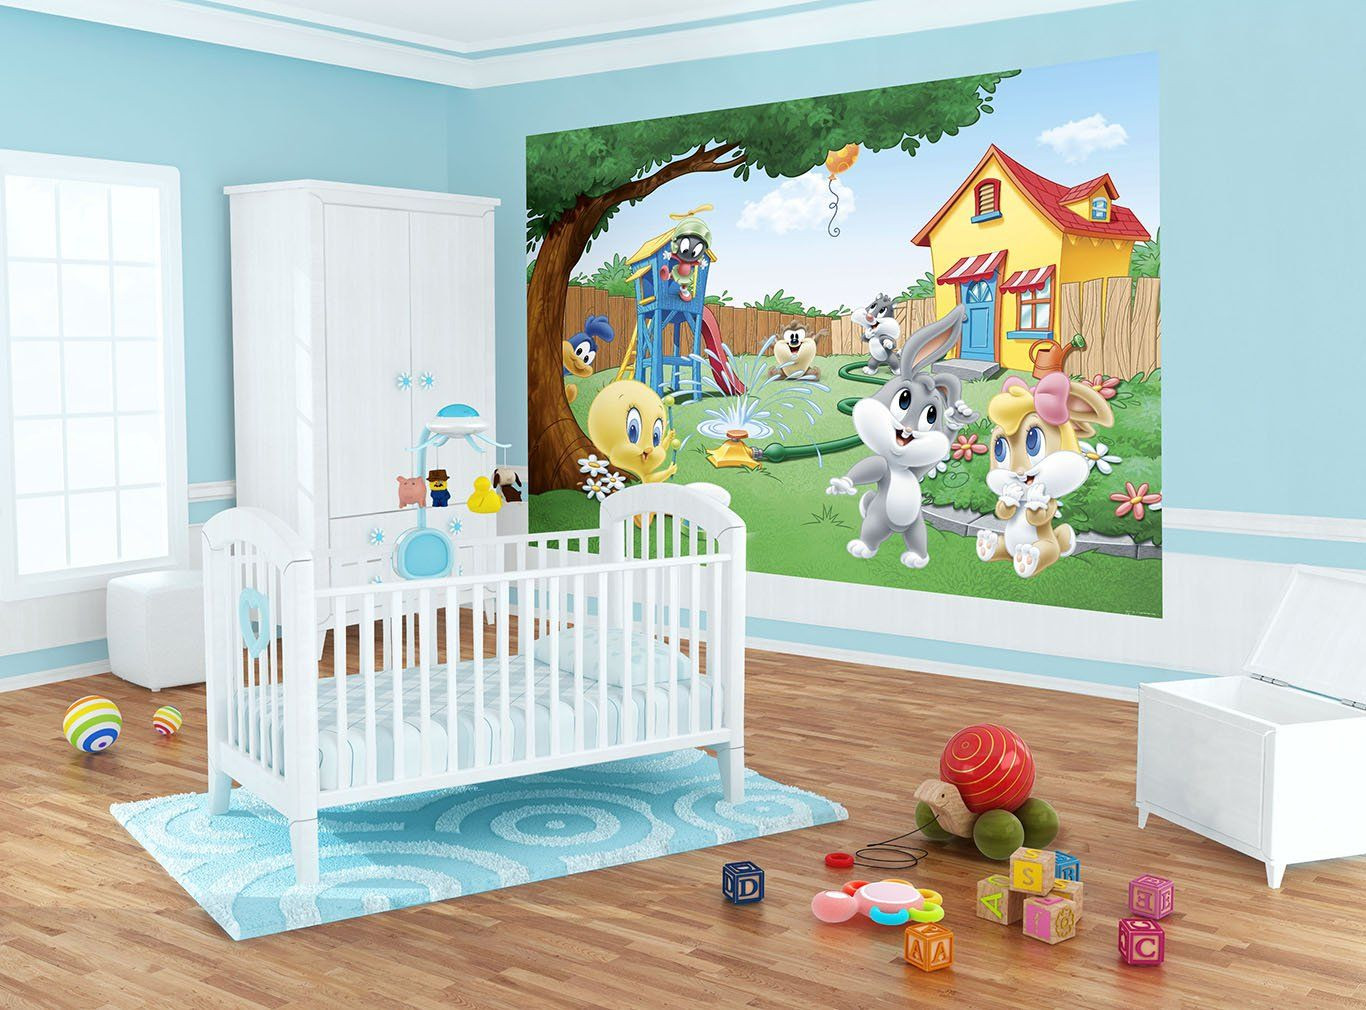 Baby Looney Tunes Nursery Decor
 Looney Tunes Baby Garden Wallpaper Mural